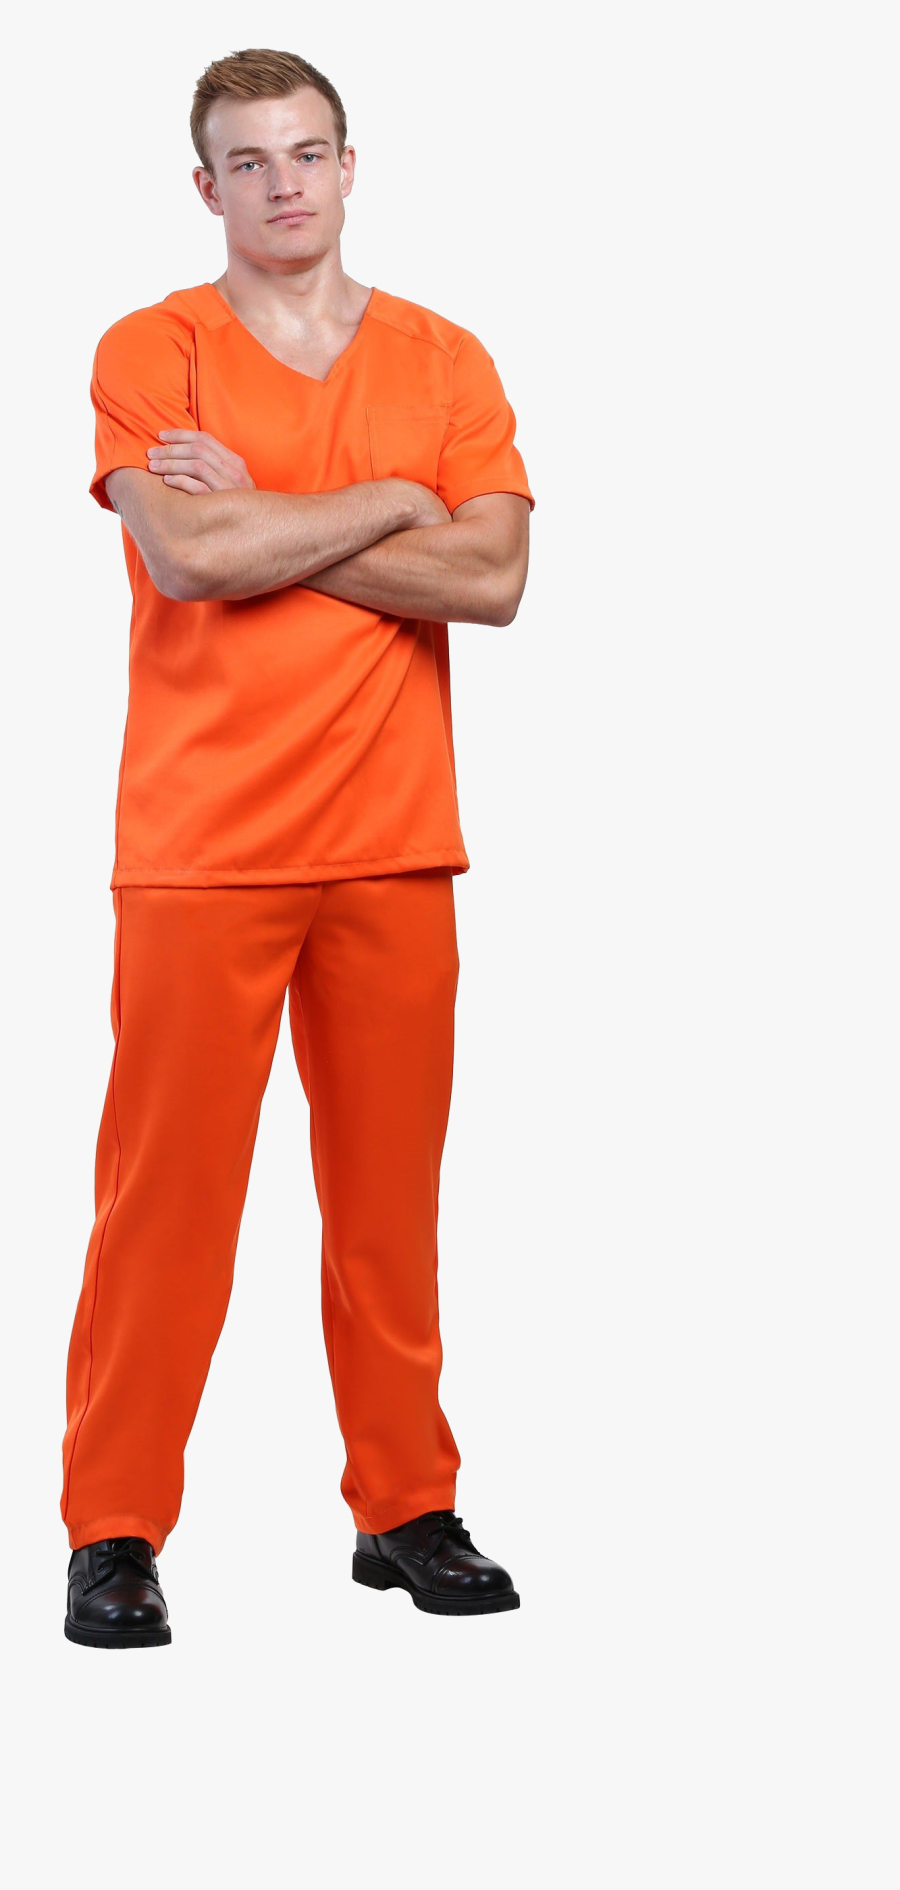 Orange Costume Prisoner Png Picture - Prisoners Png, Transparent Clipart